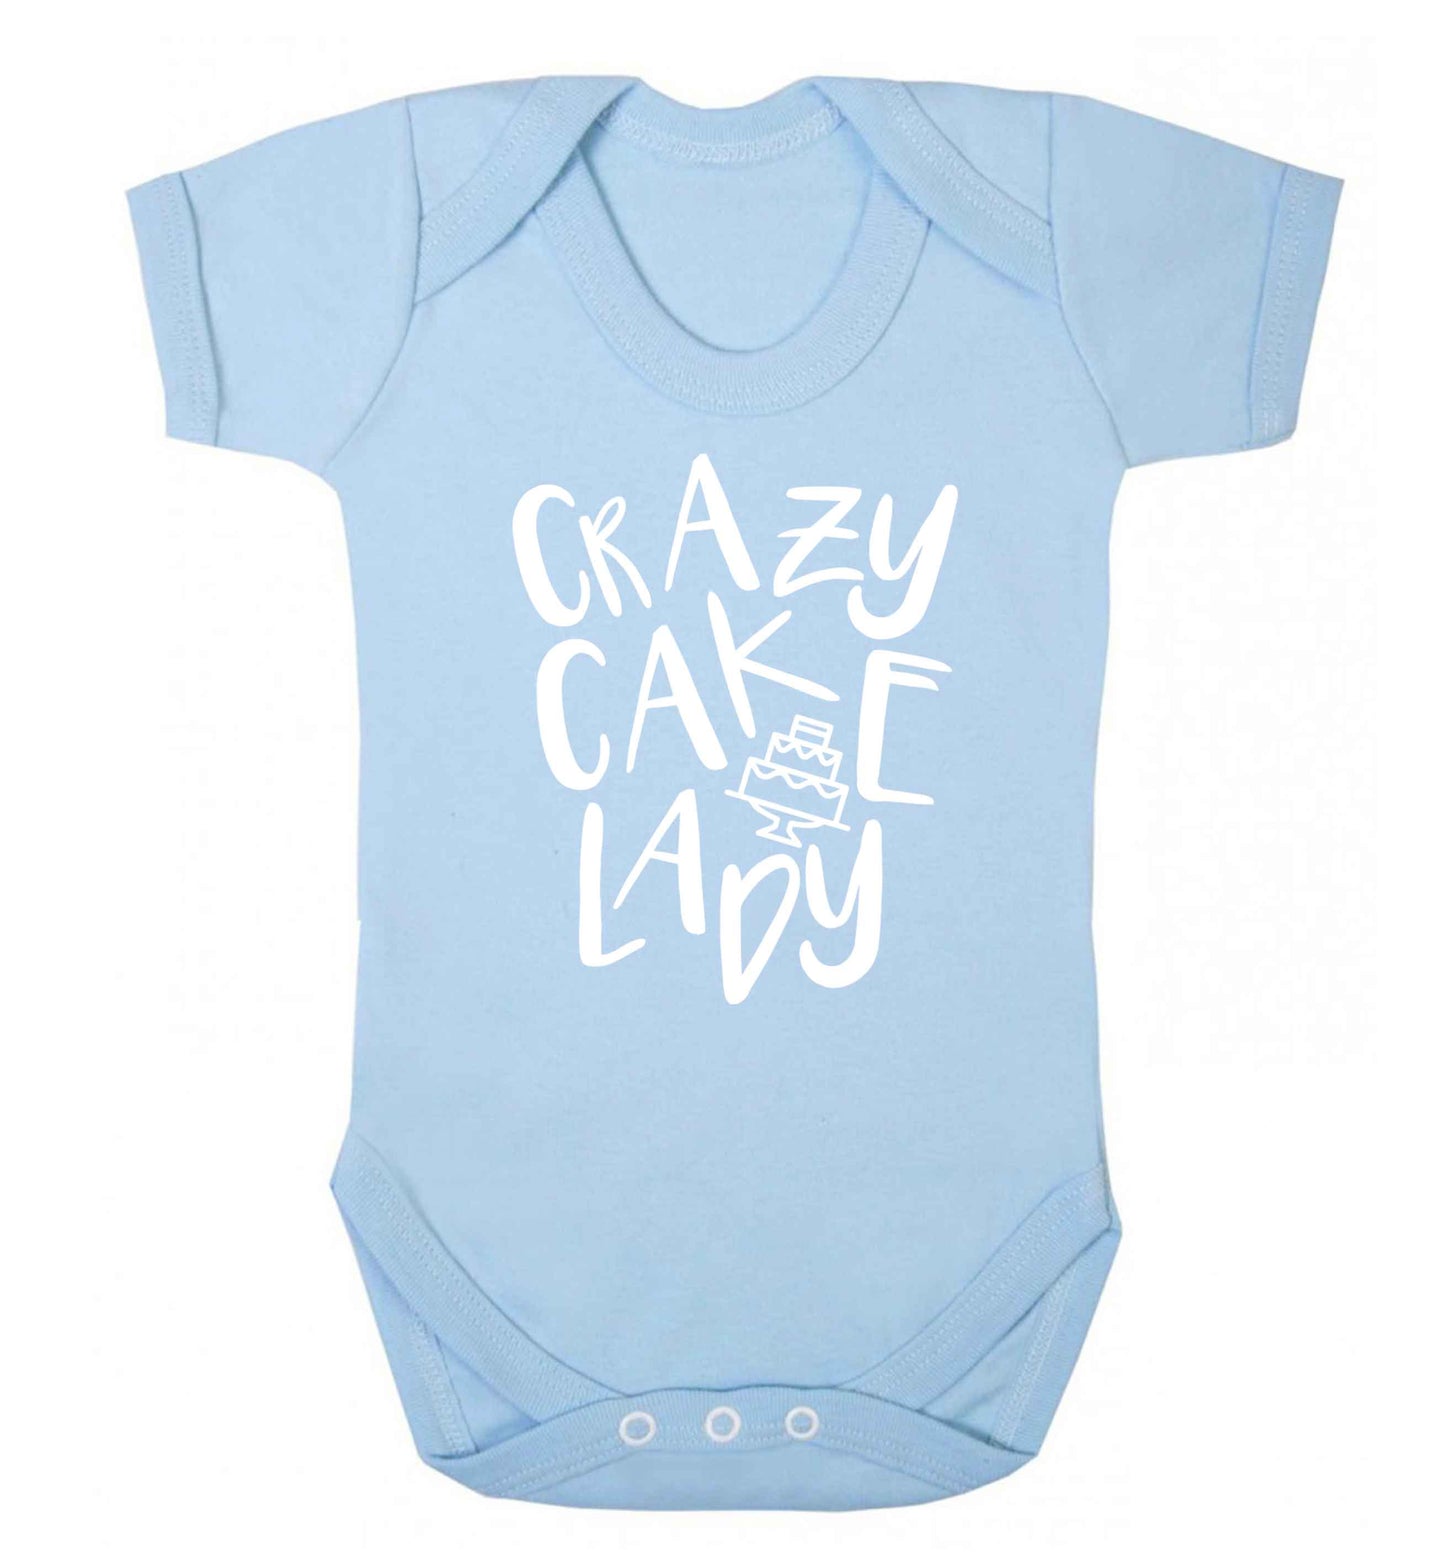 Crazy cake lady Baby Vest pale blue 18-24 months